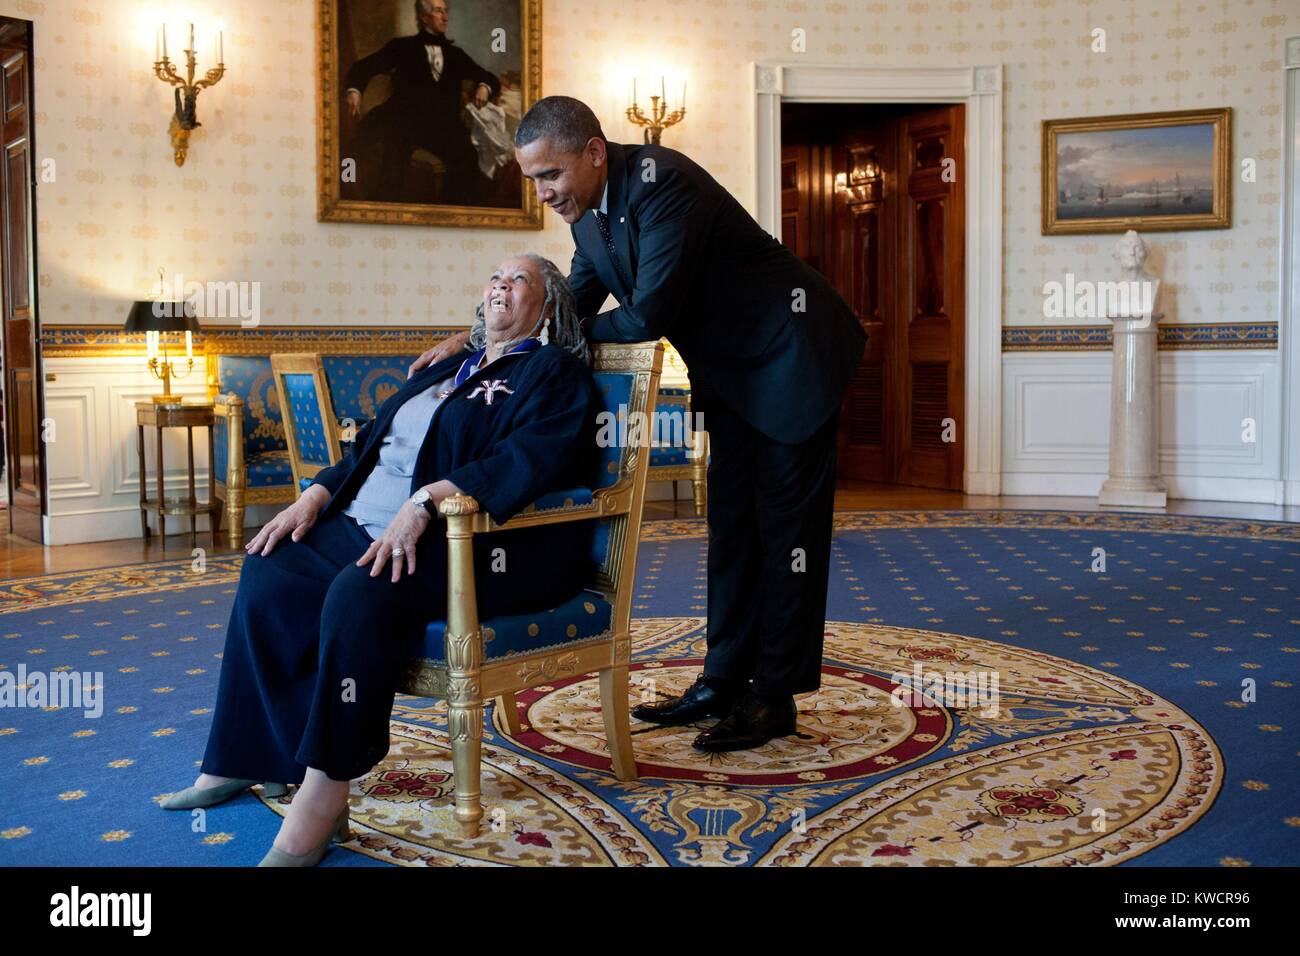 Us-Präsident Barack Obama Gespräche mit dem Presidential Medal of Freedom Empfänger Toni Morrison. Im Blue Room des Weißen Hauses, 29. Mai 2012 (BSLOC 2015 3 131) Stockfoto